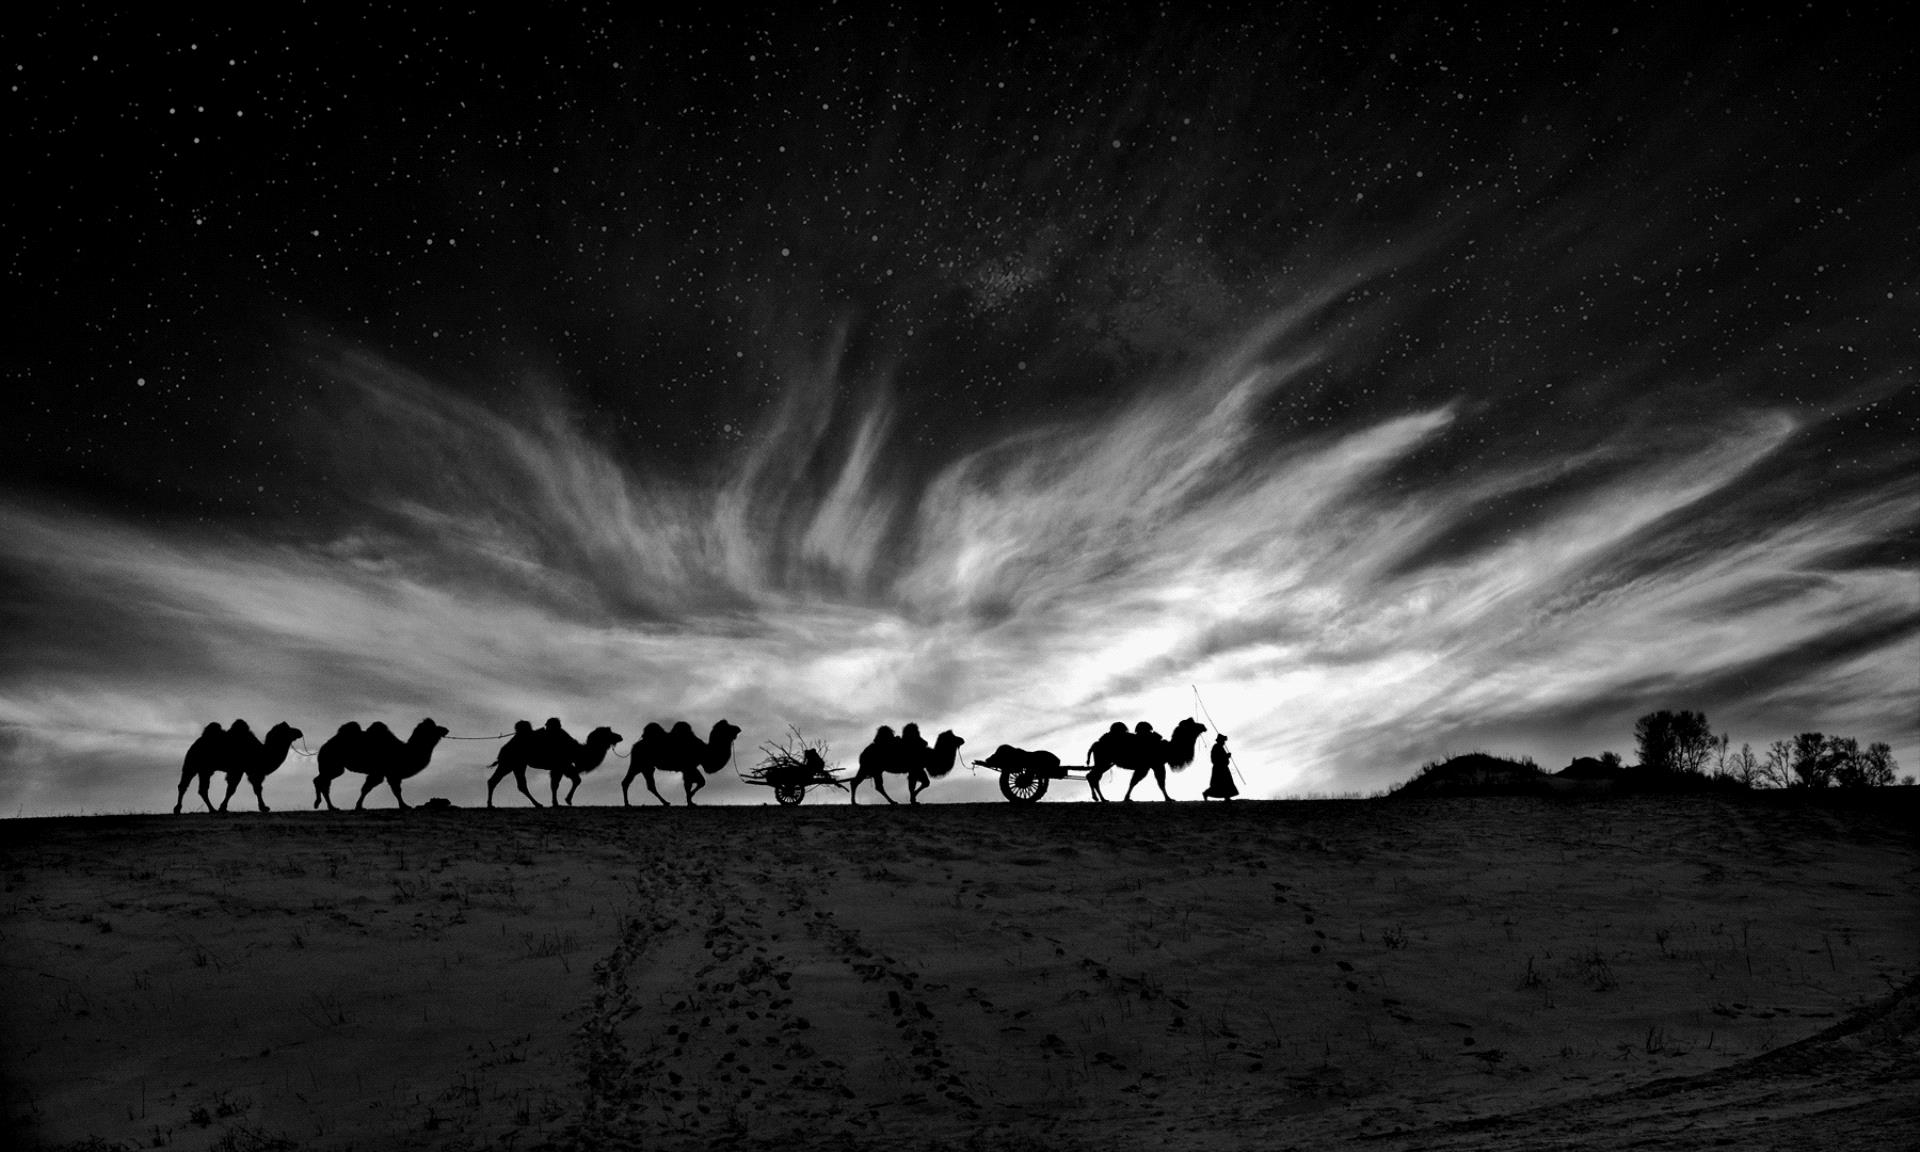 Golden Dragon Photo Award - Joao Taborda (Portugal) - The Night Caravan